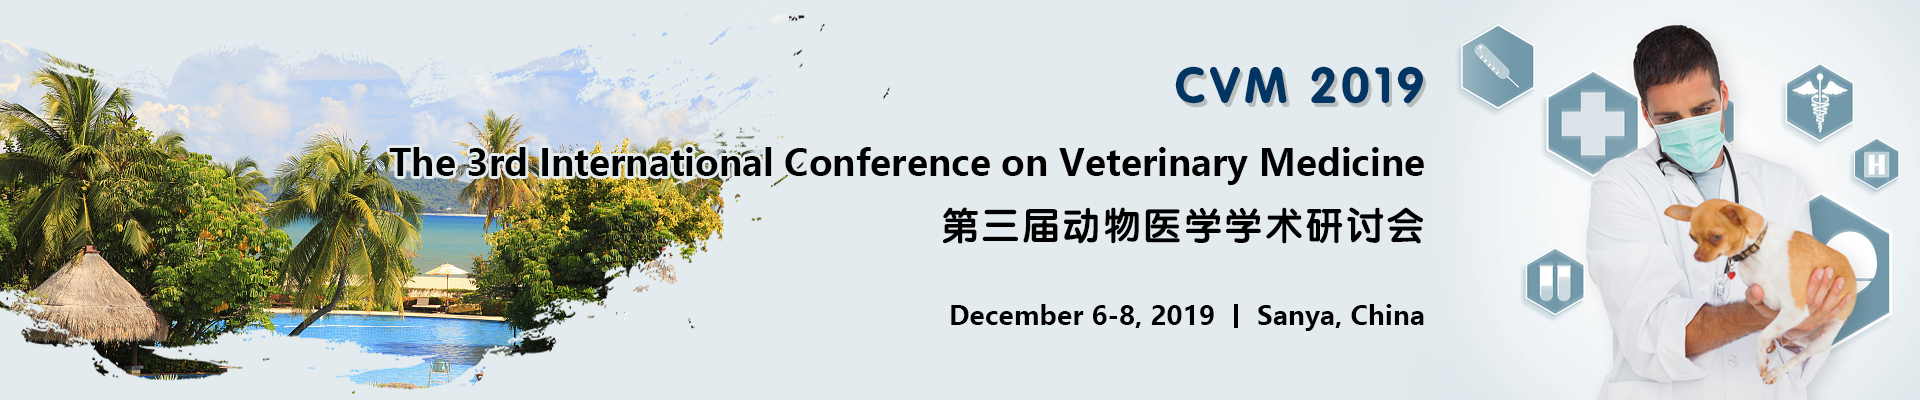 The 3rd International Conference on Veterinary Medicine (CVM 2019), Sanya, Hainan, China